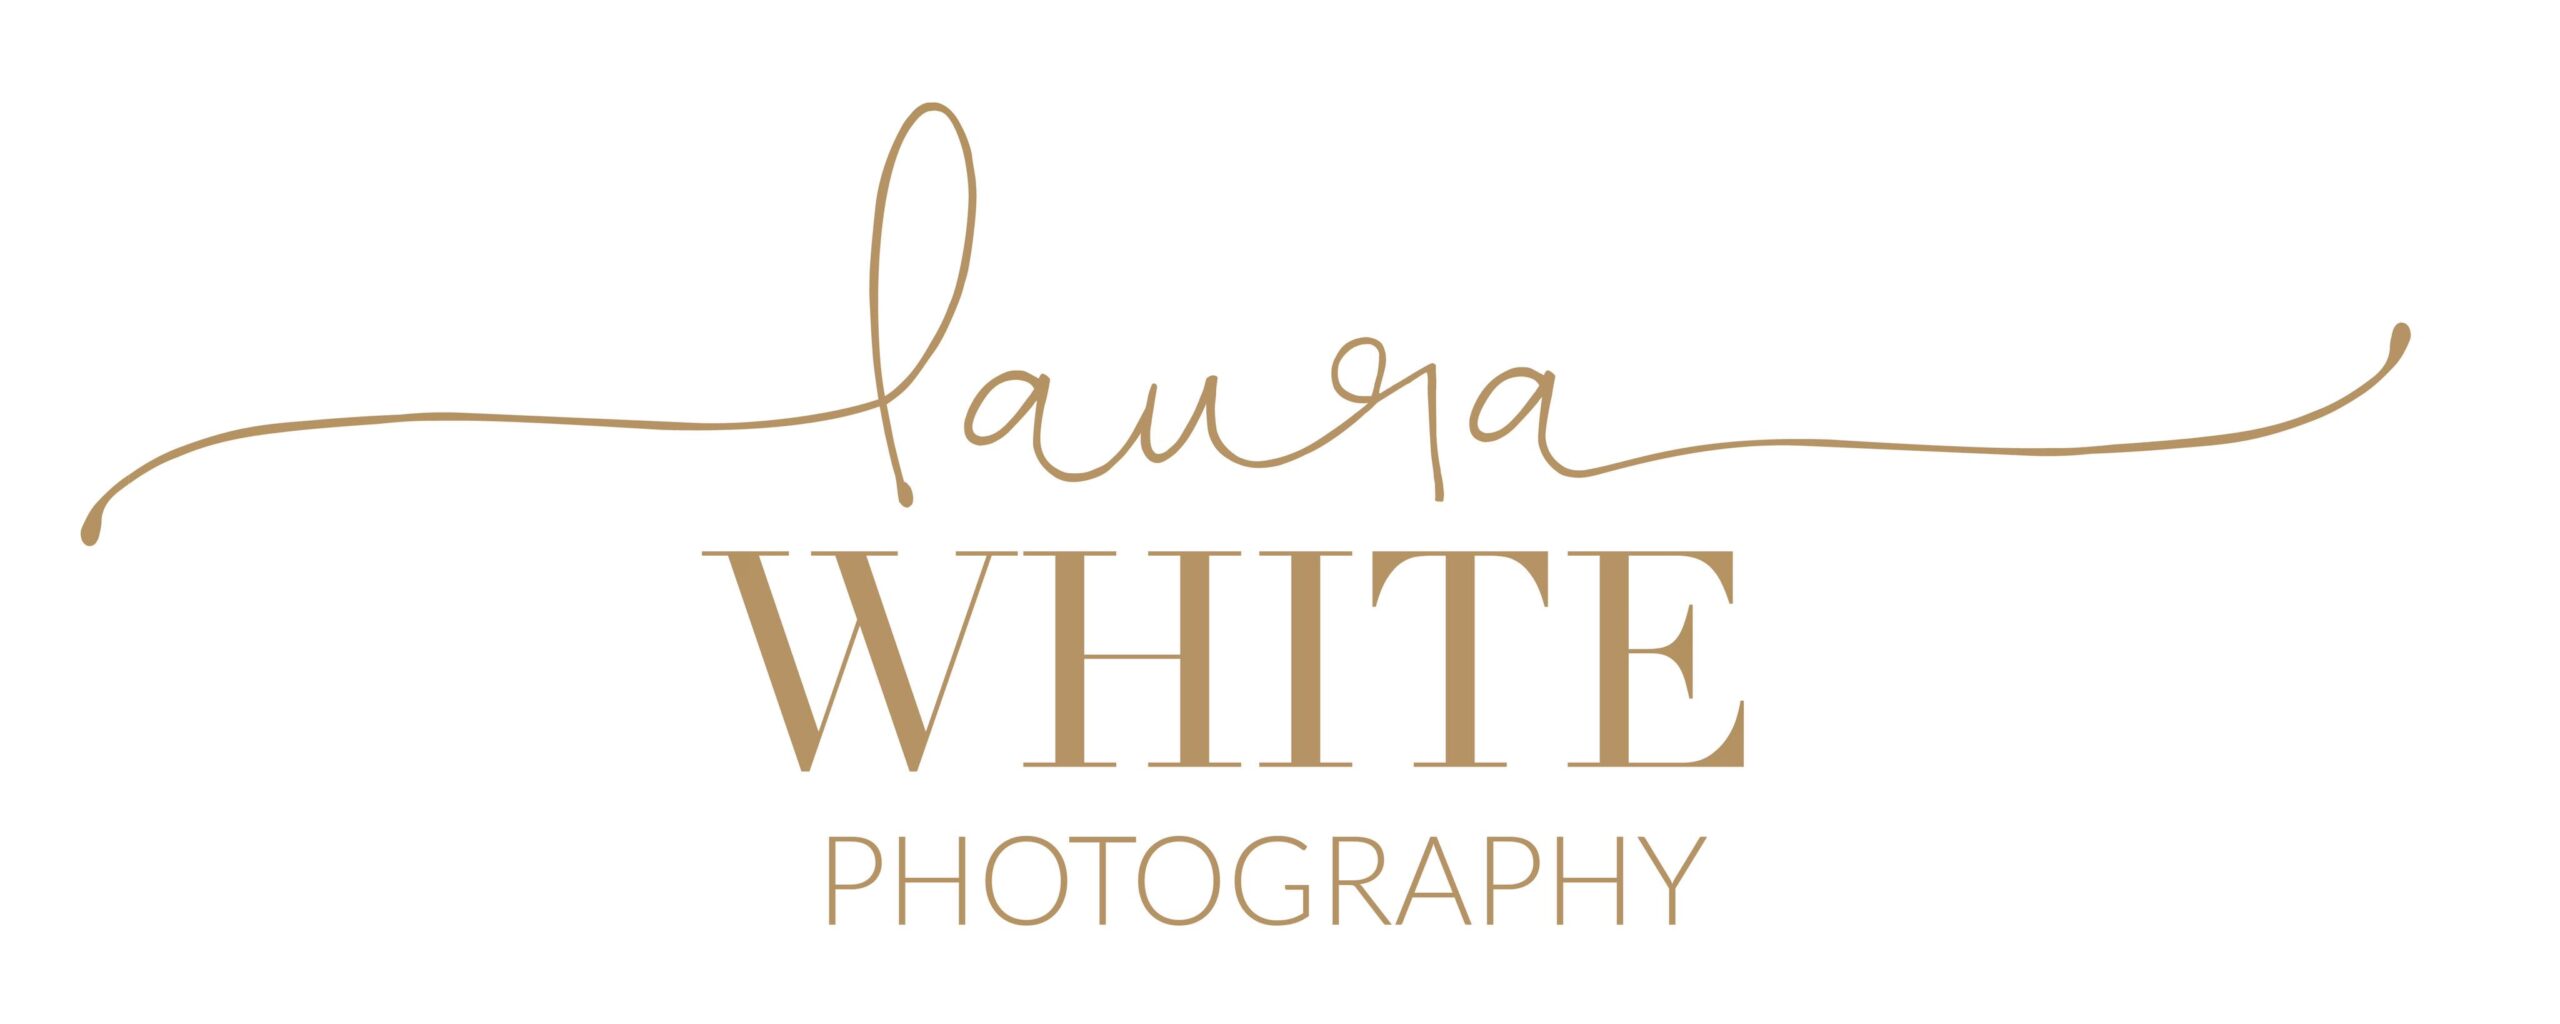 Laura White Photography